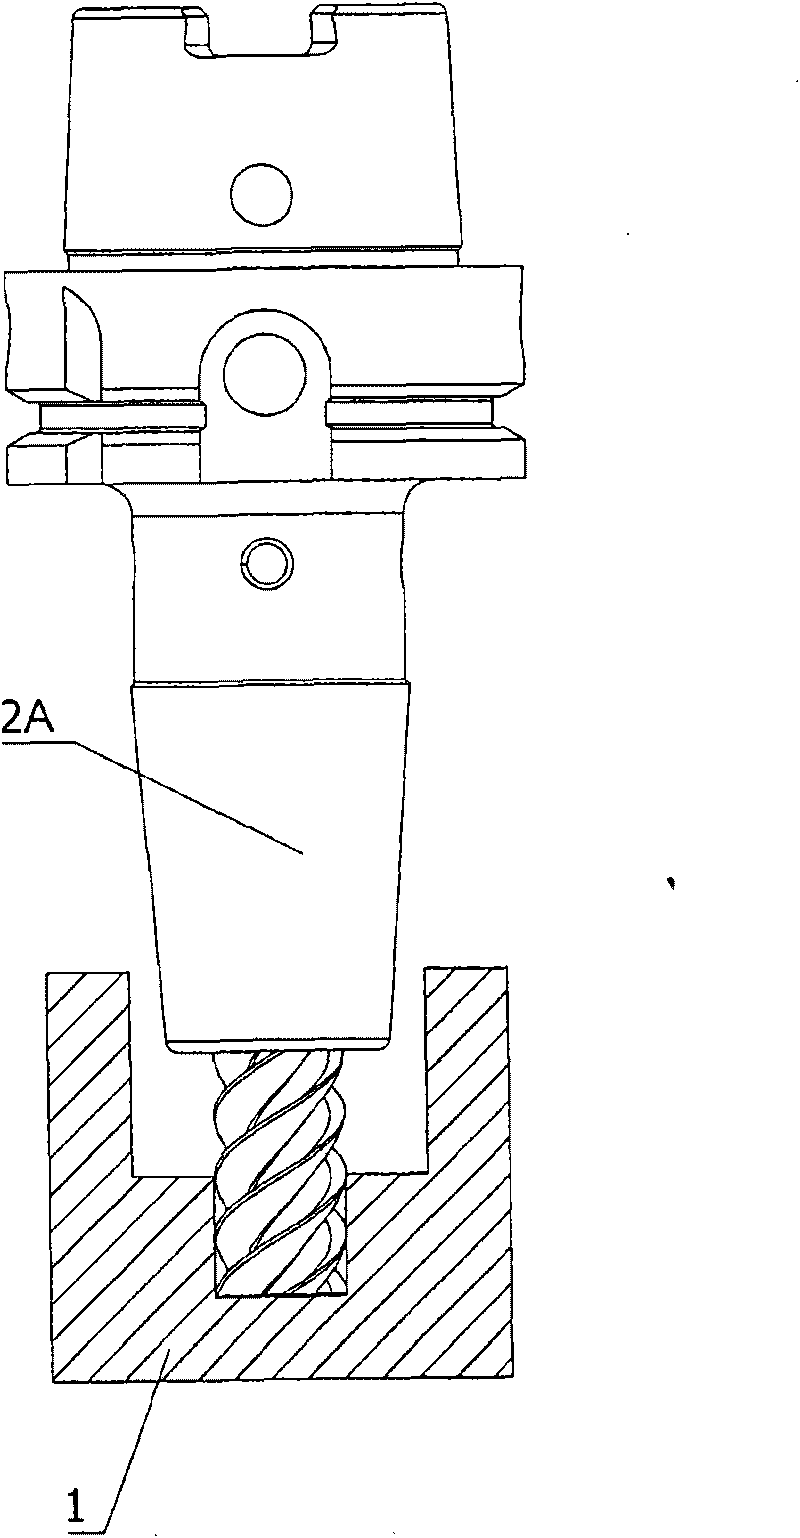 Worm-gear type collet chuck locking mechanism